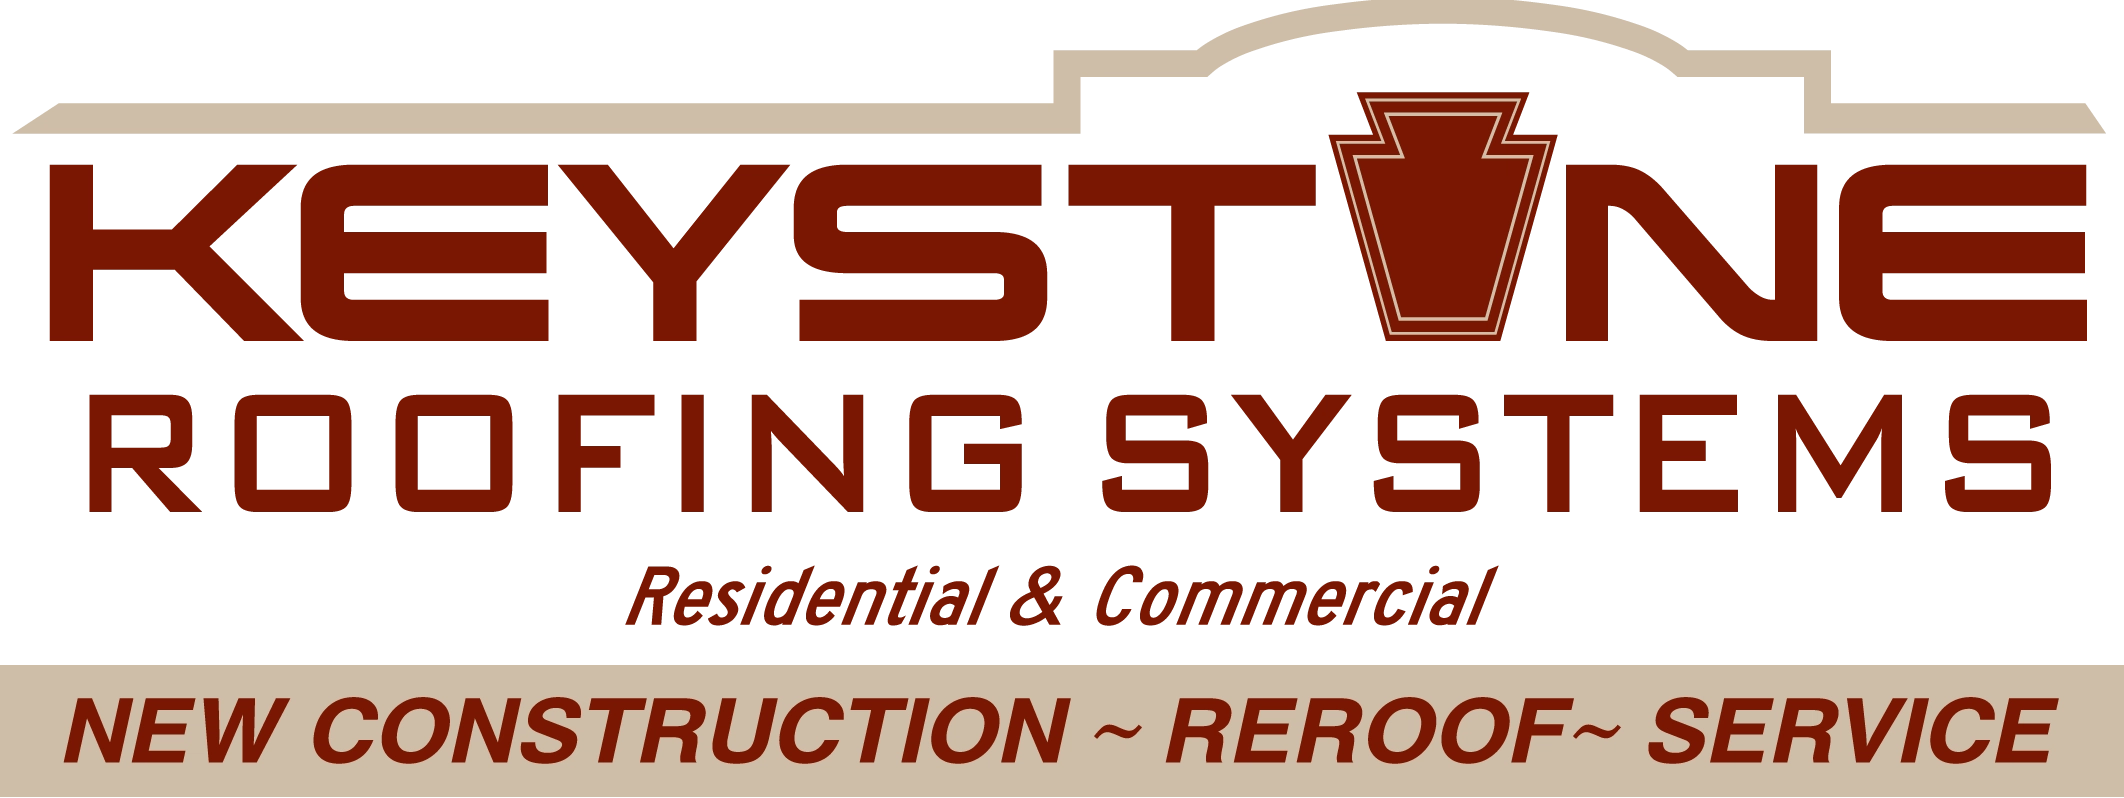 Keystone Roofing Systems Logo